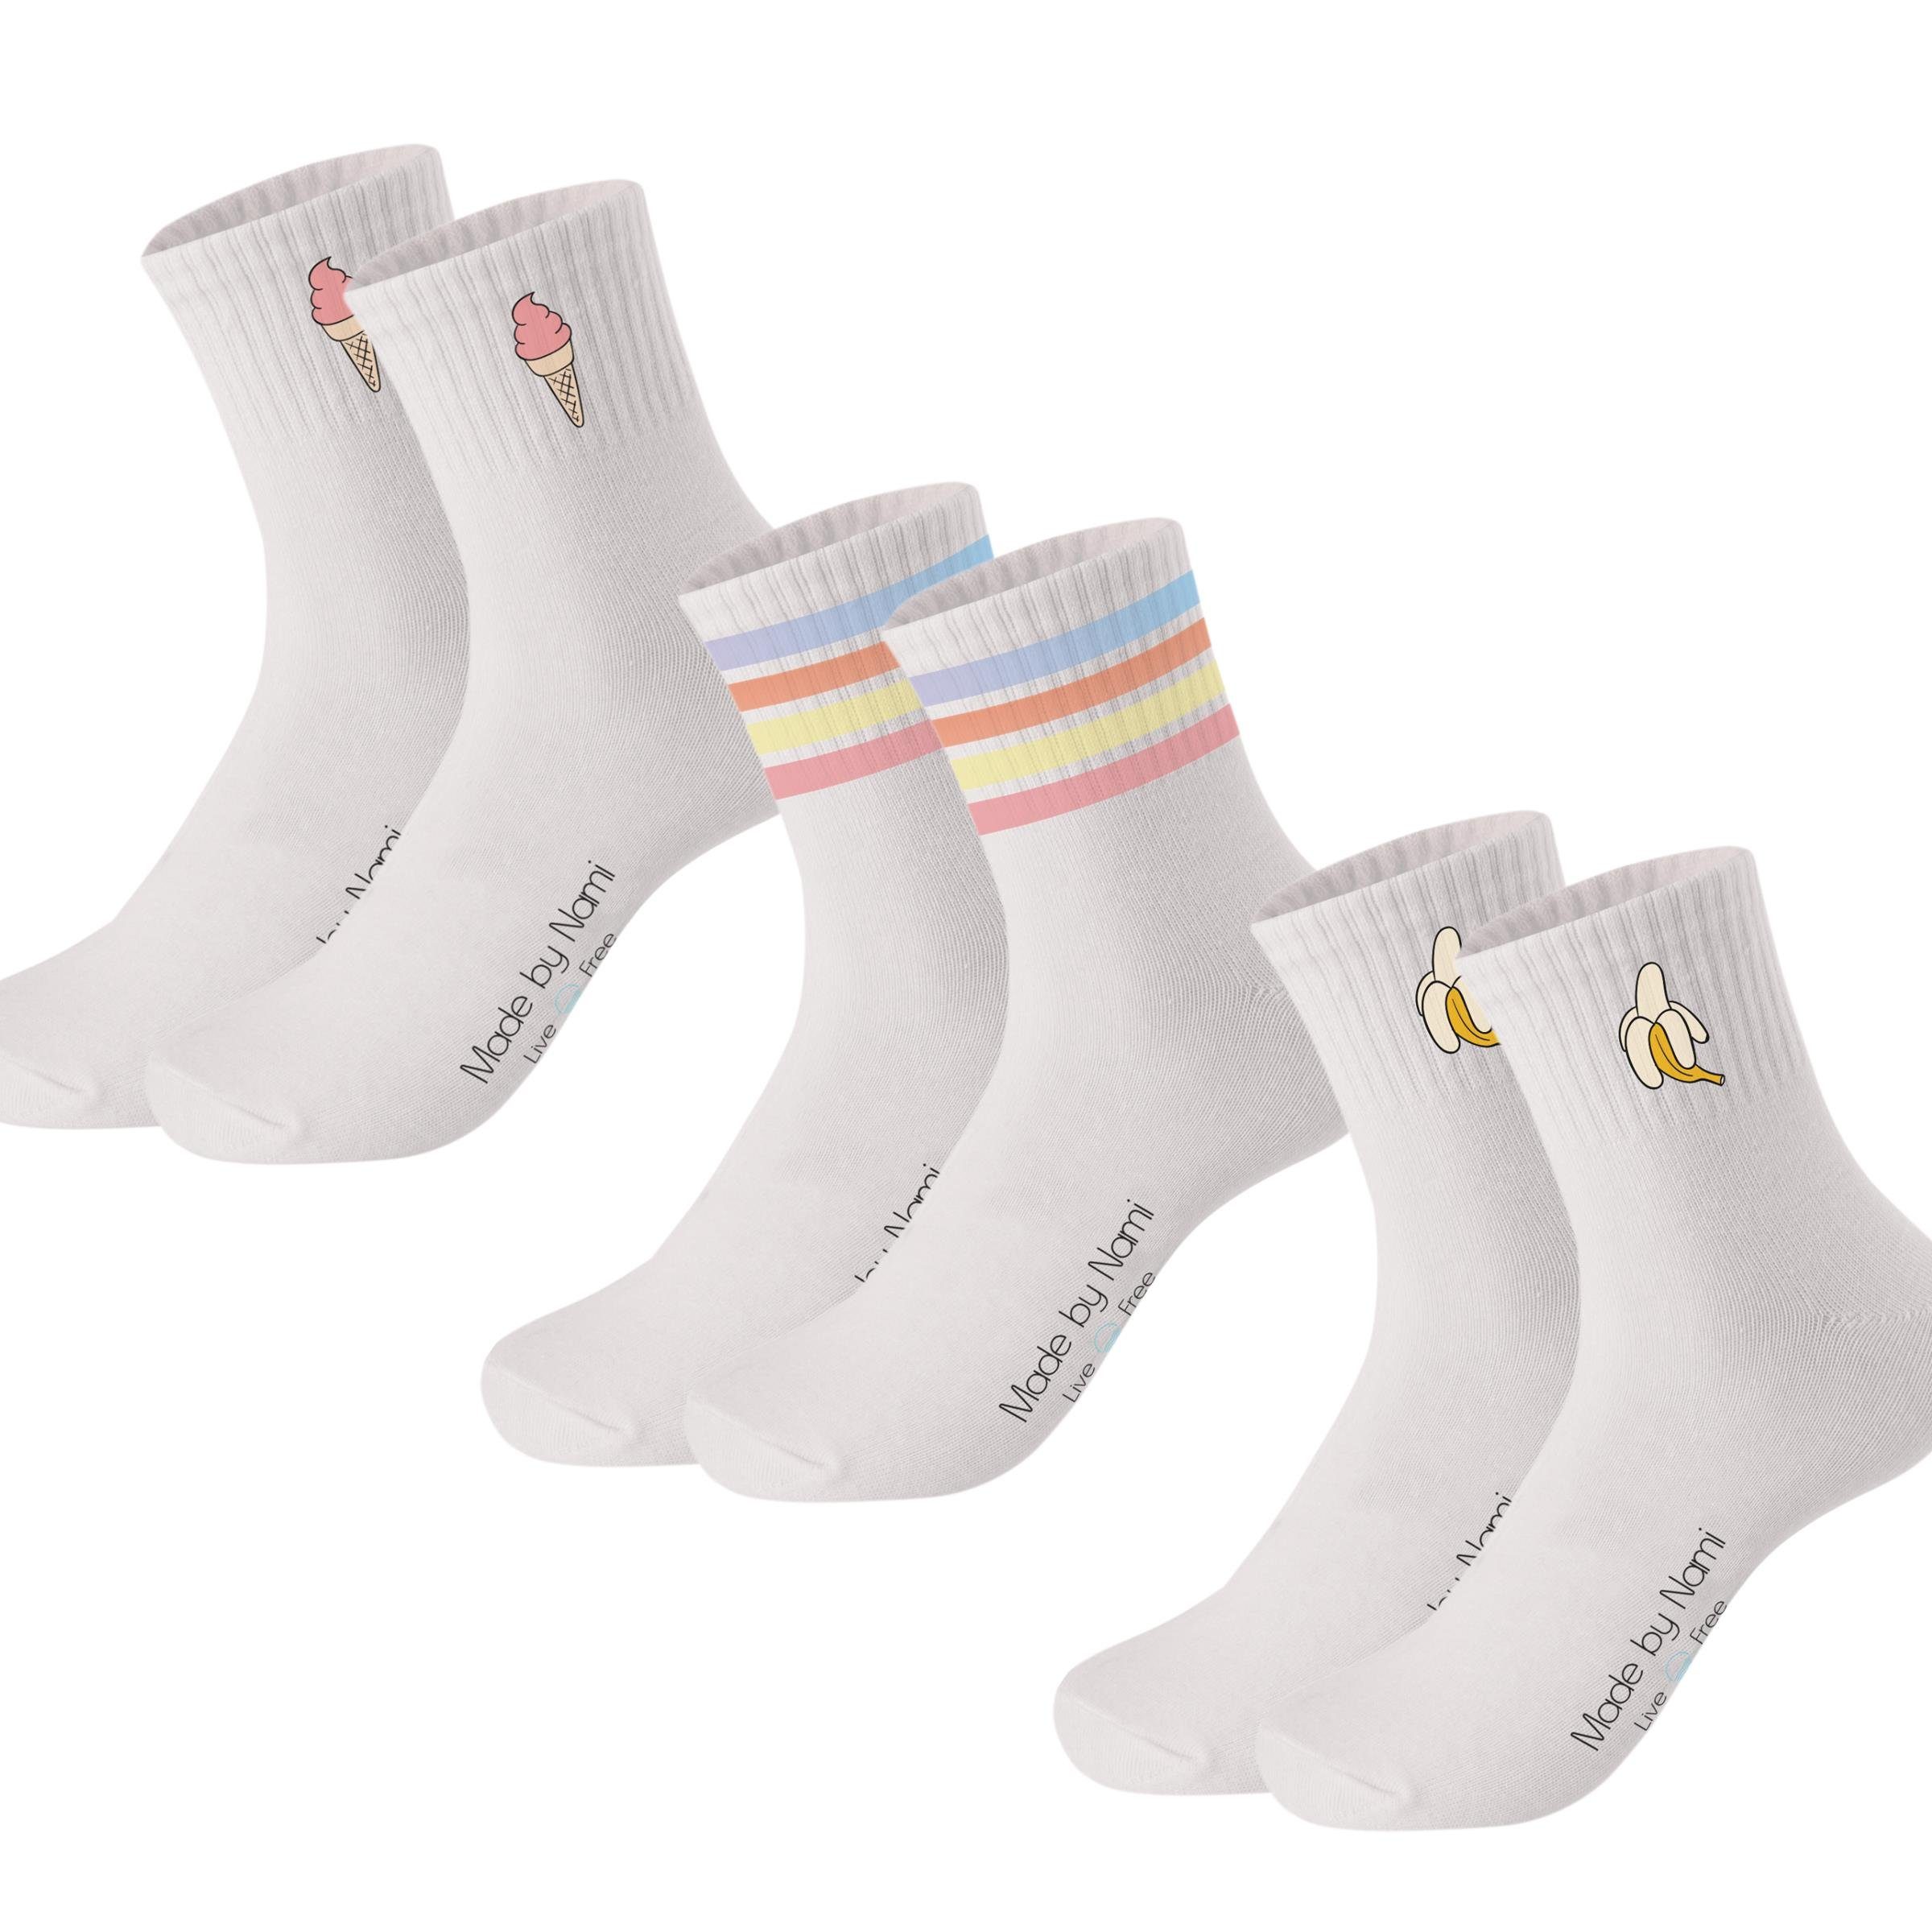 Made by Nami Носки Crew Socks Tennissocken weiß - Print - Baumwolle (3-Paar) 35-40, atmungsaktiv